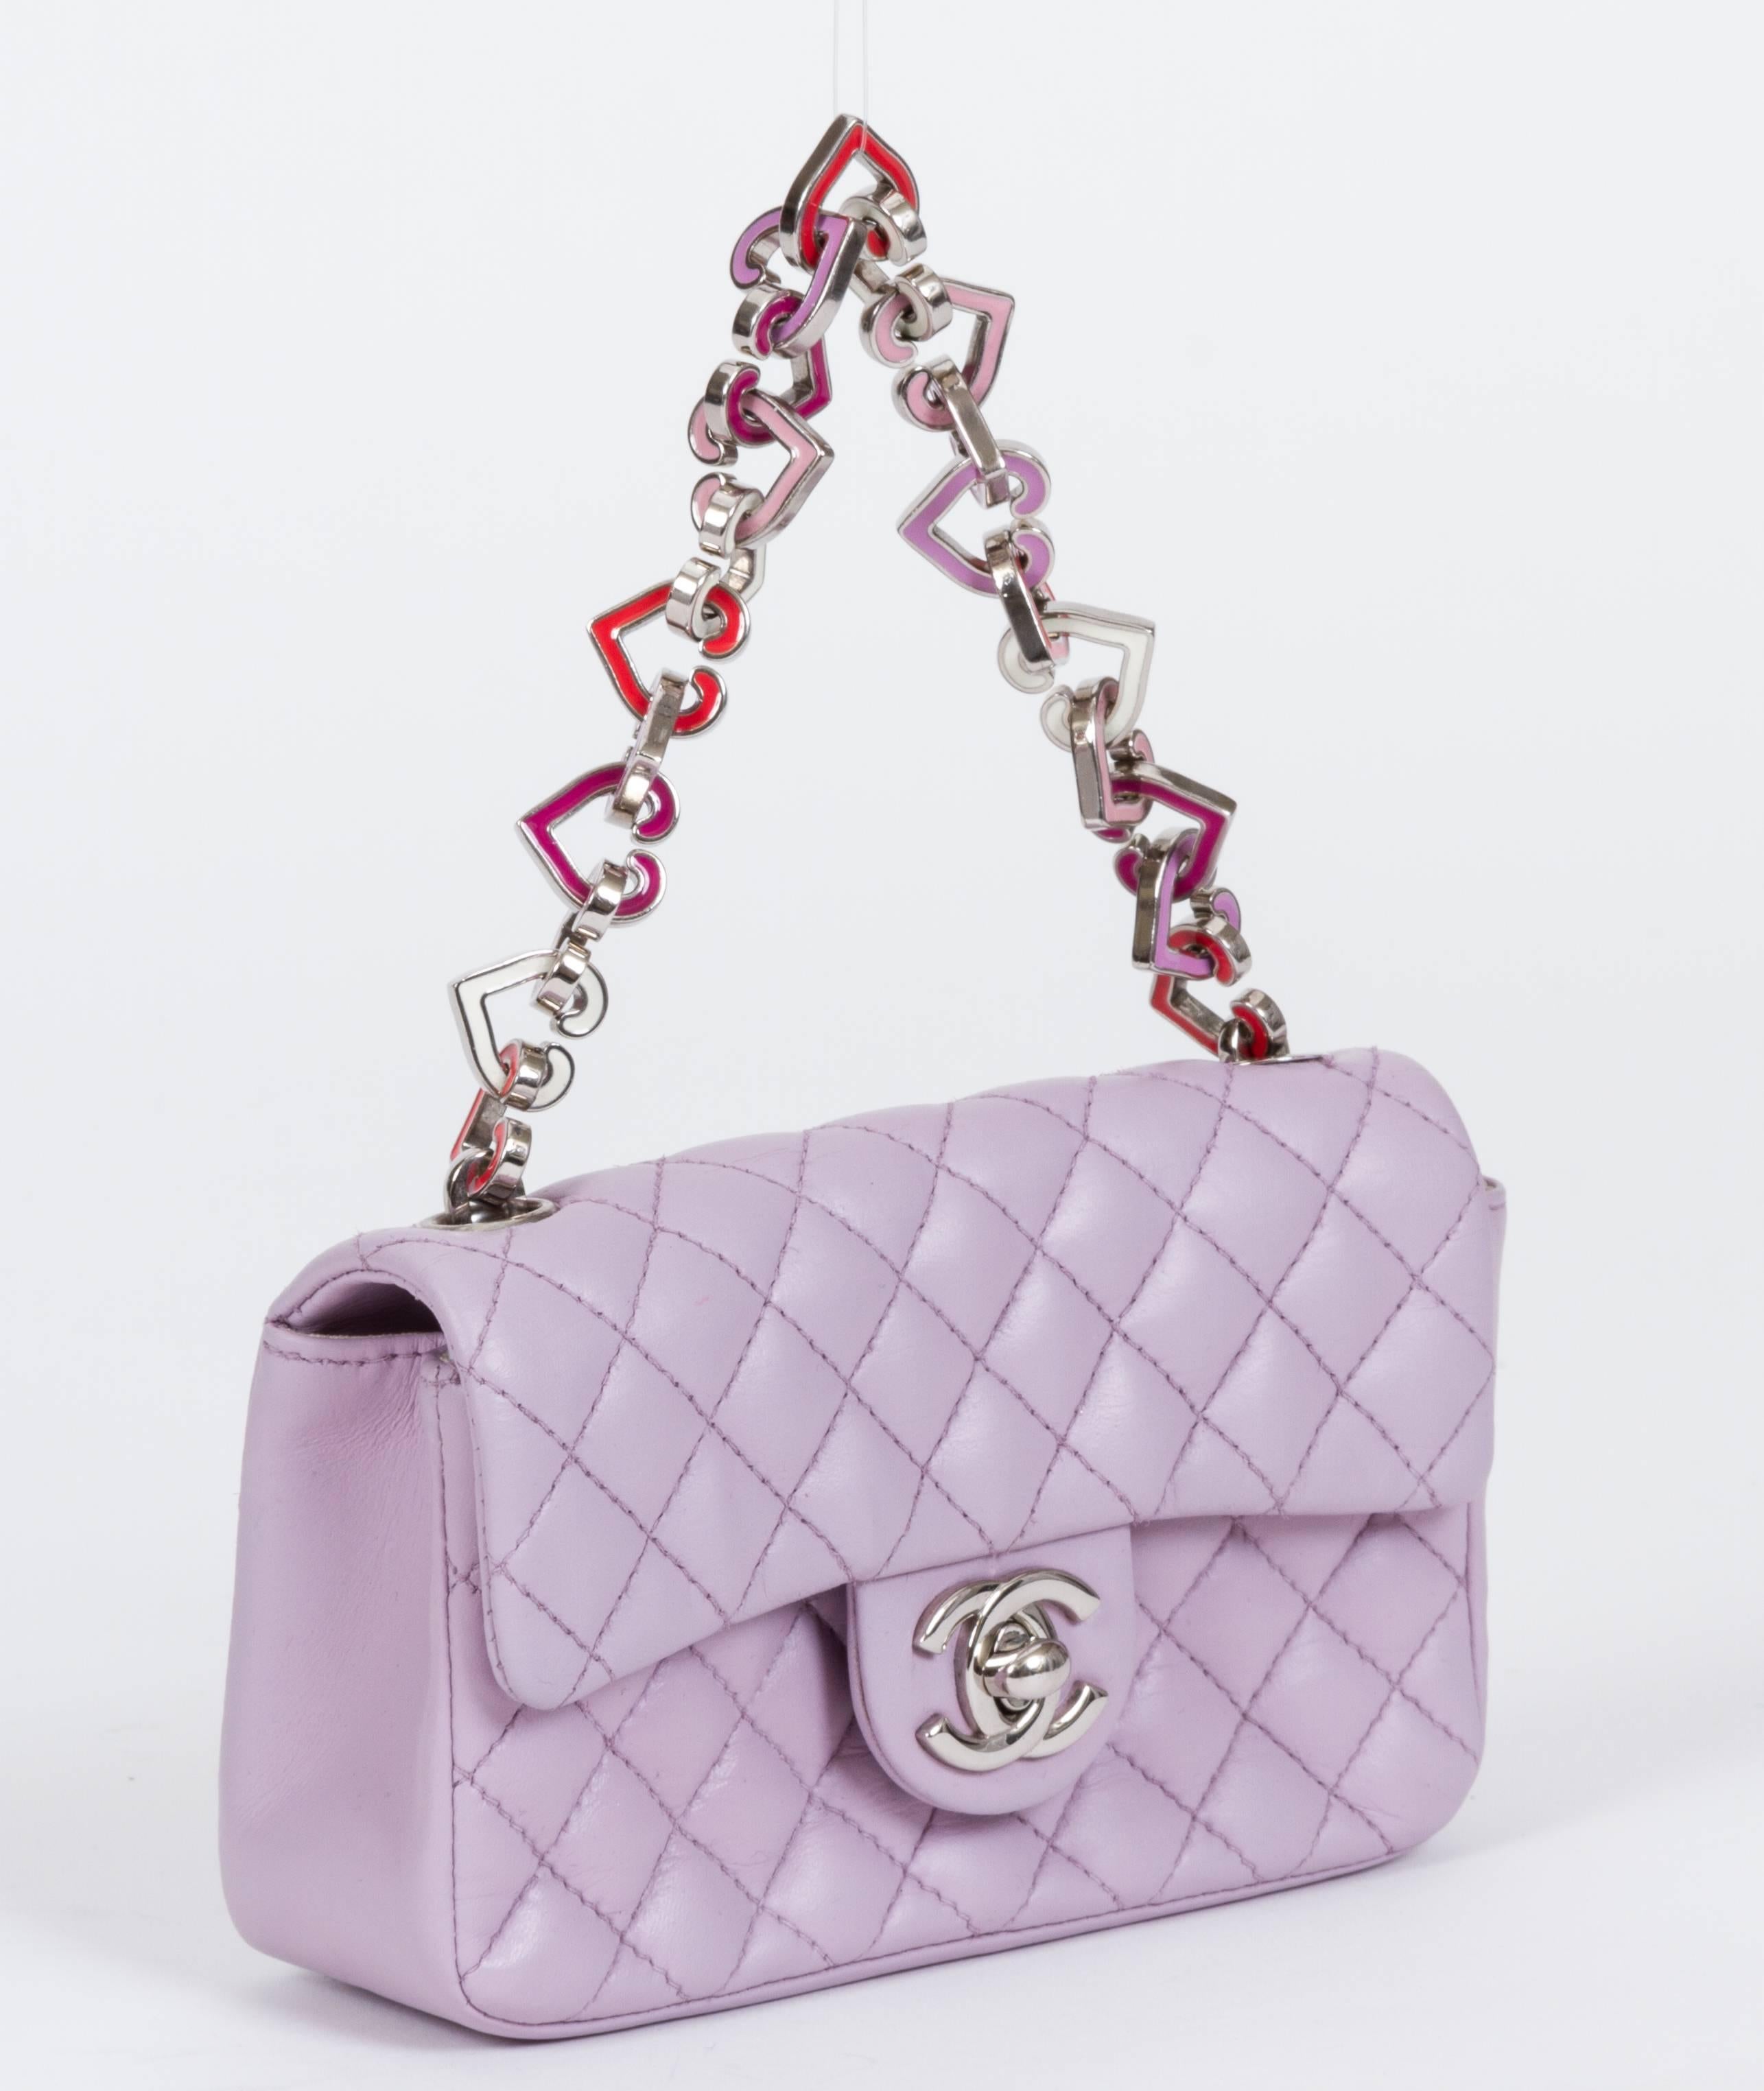 Chanel limited edition charm mini classic flap bag. Hearts enamel chain drop, L 3.5